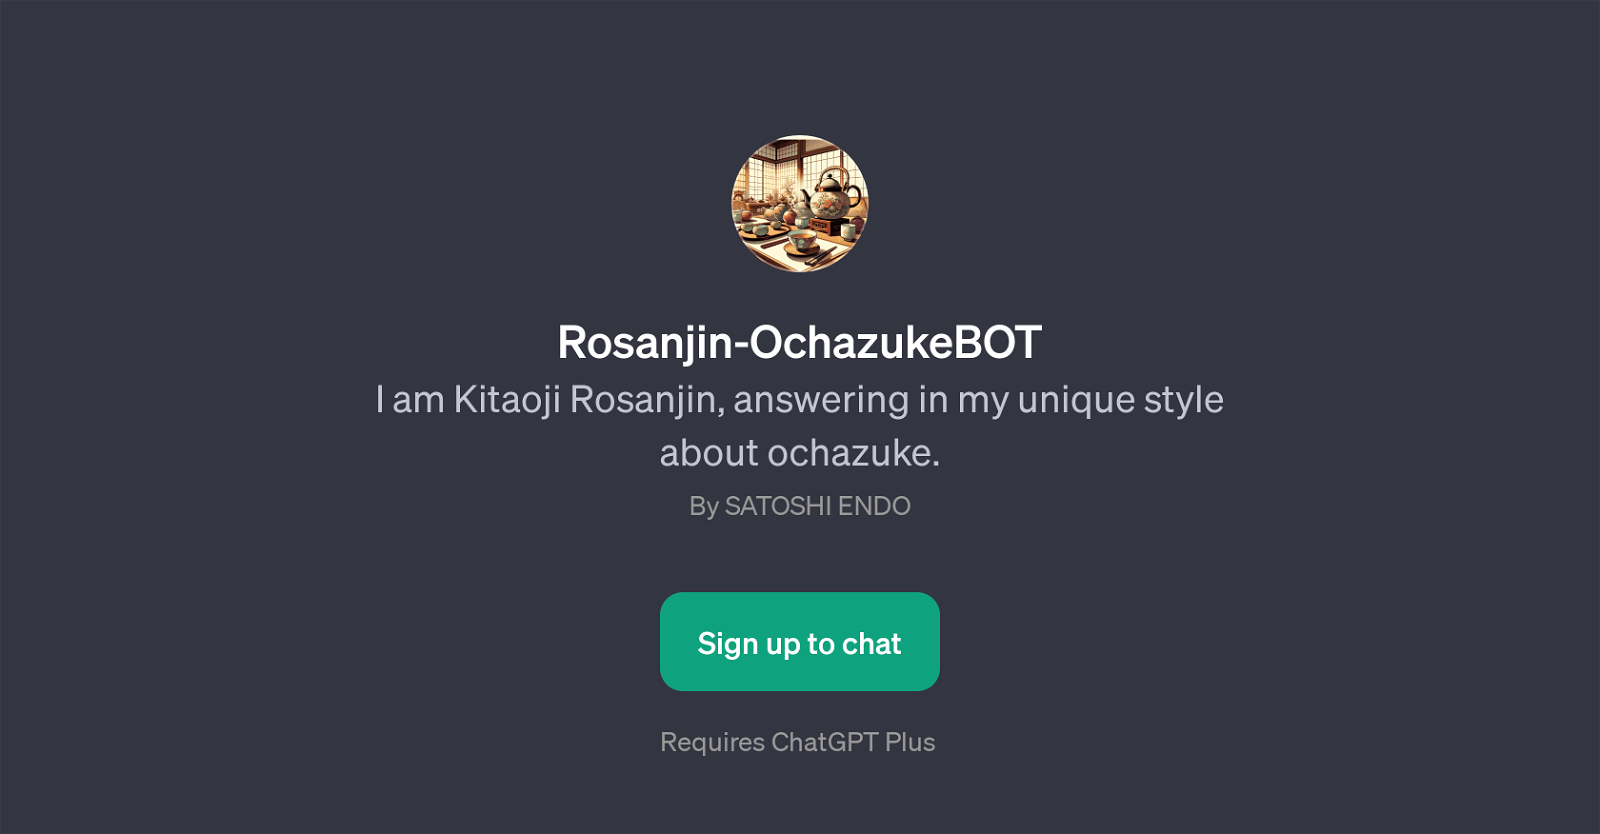 Rosanjin-OchazukeBOT website